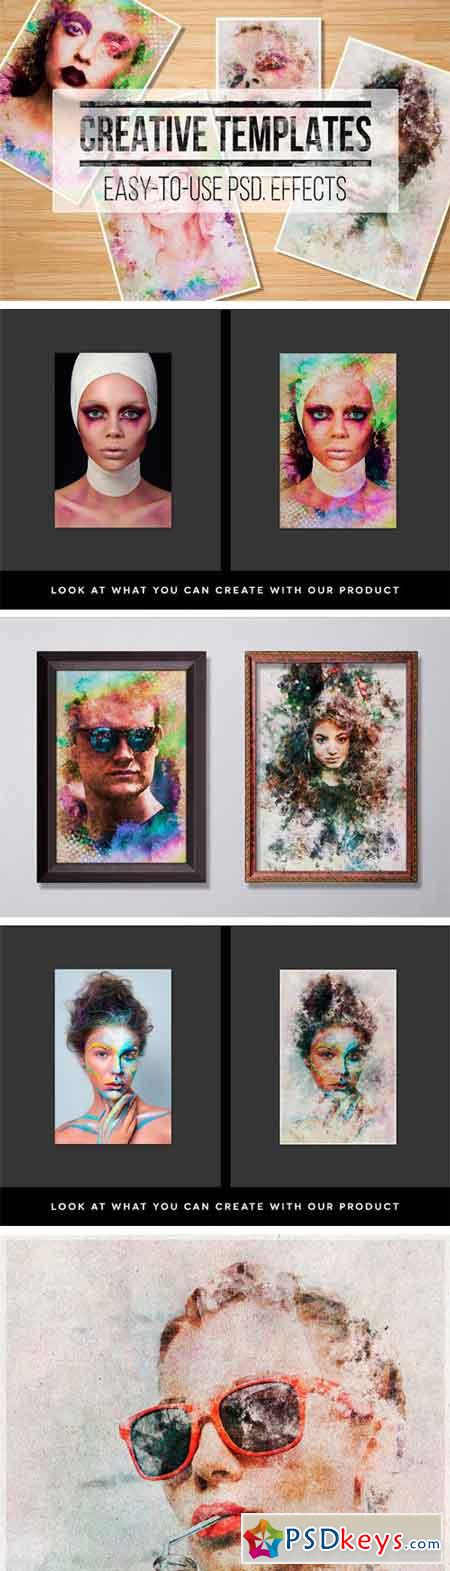 2 Creative Portrait Templates 2262114